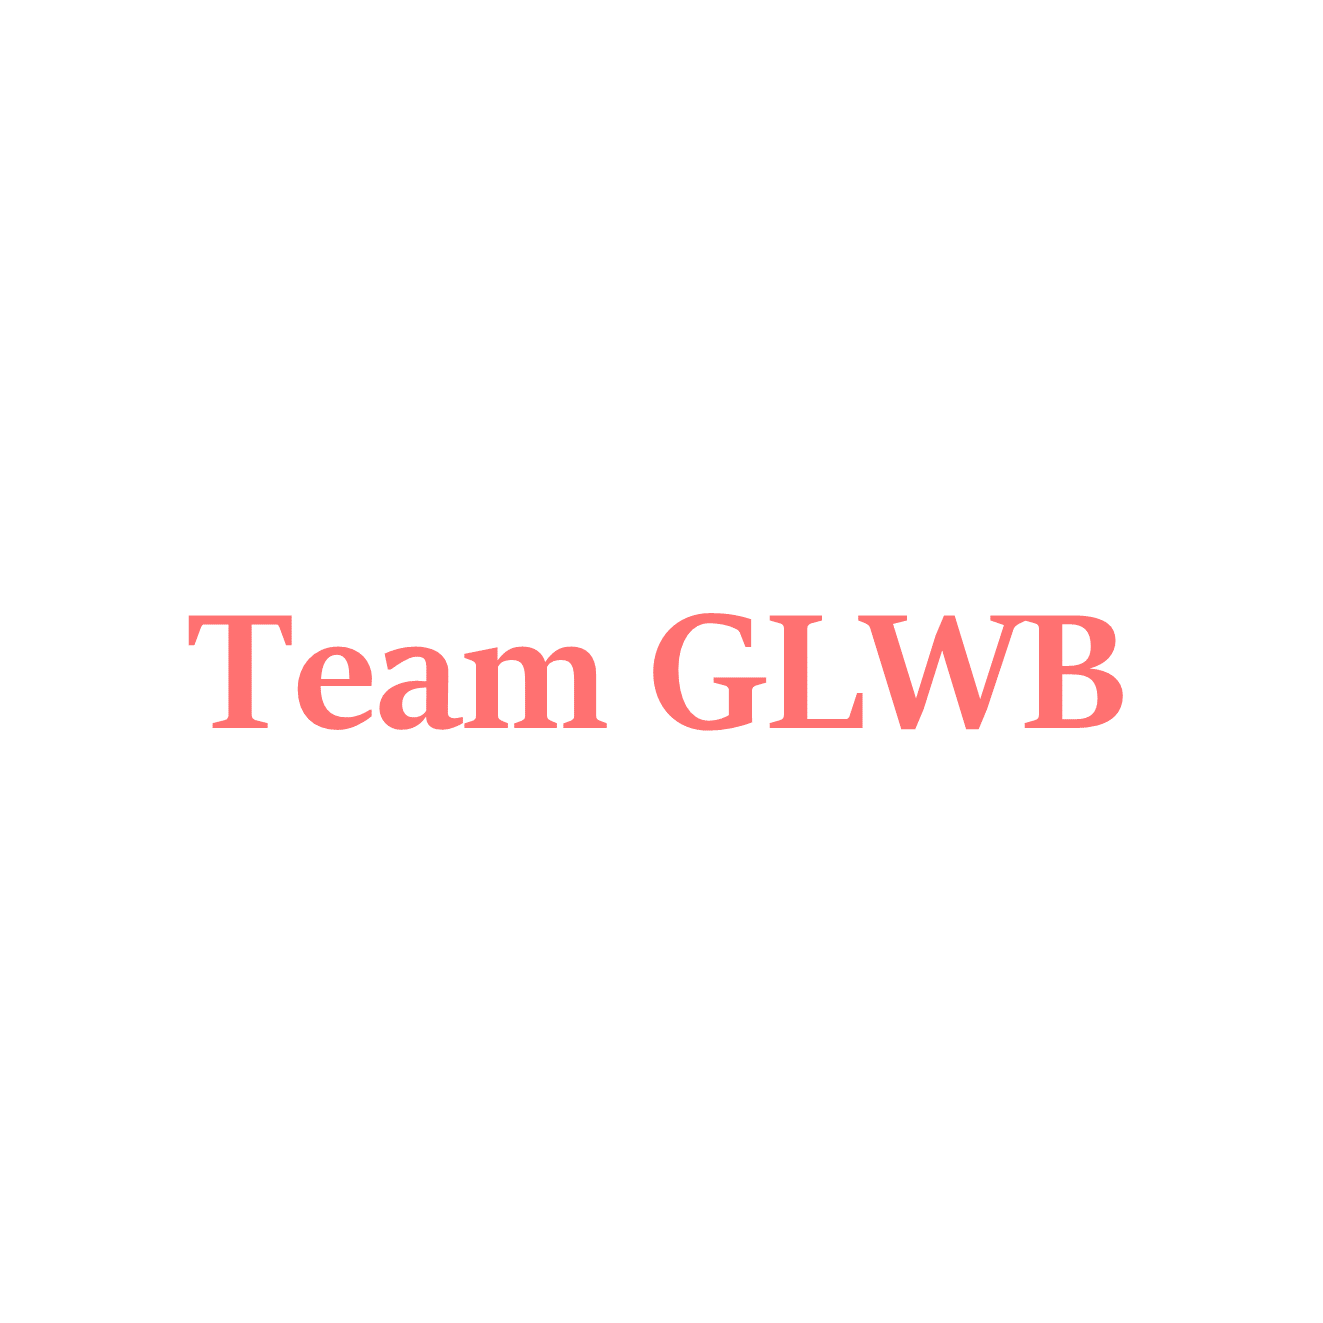 Team GLWB